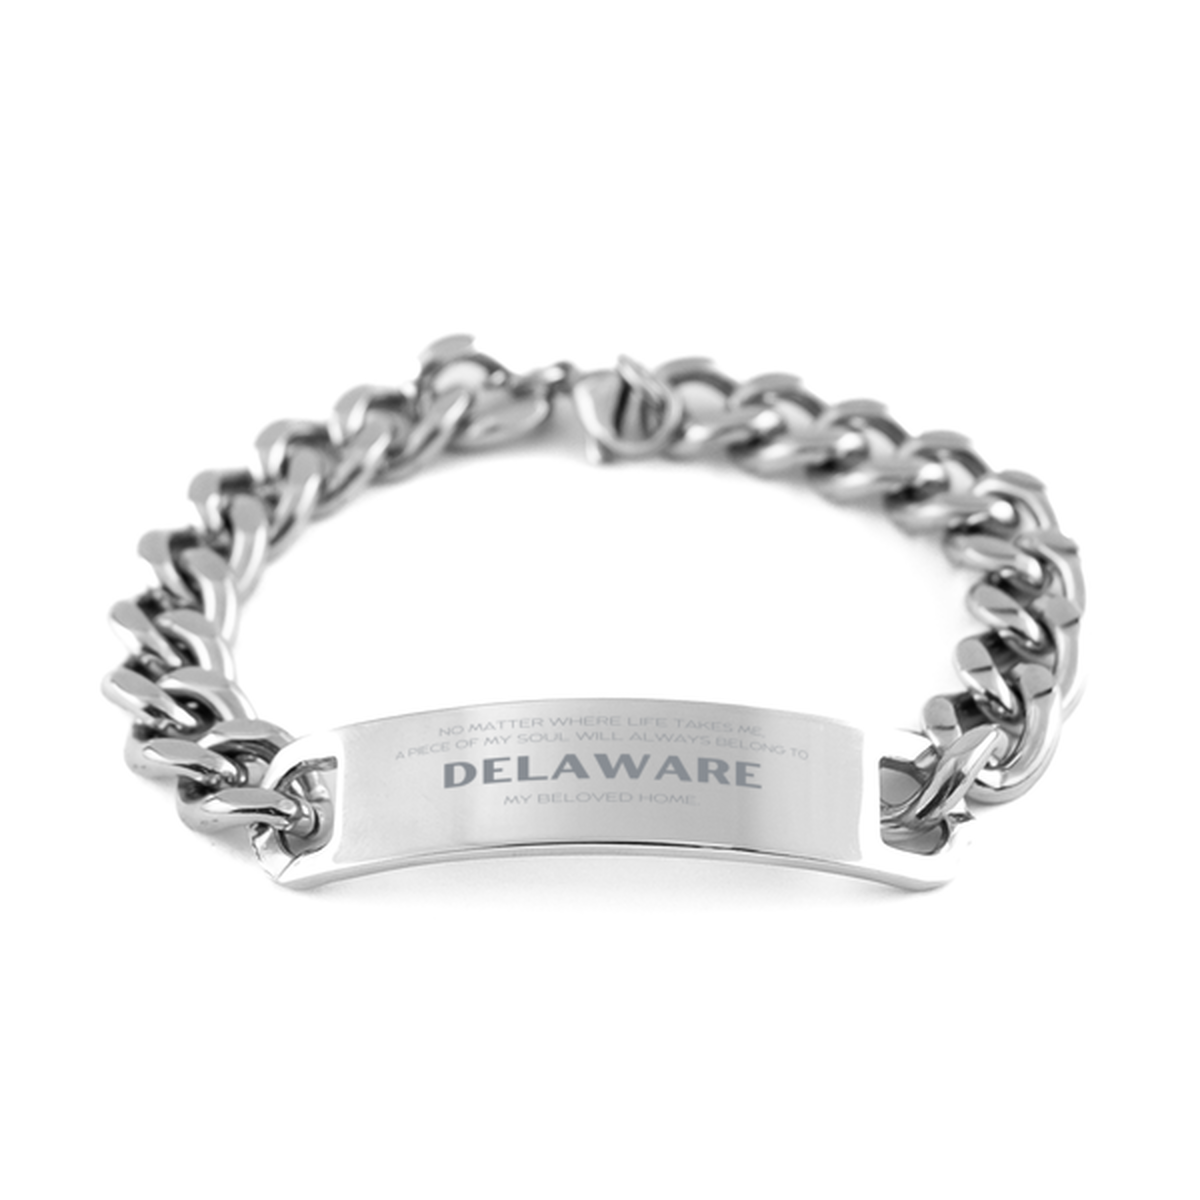 Love Delaware State Gifts, My soul will always belong to Delaware, Proud Cuban Chain Stainless Steel Bracelet, Birthday Unique Gifts For Delaware Men, Women, Friends